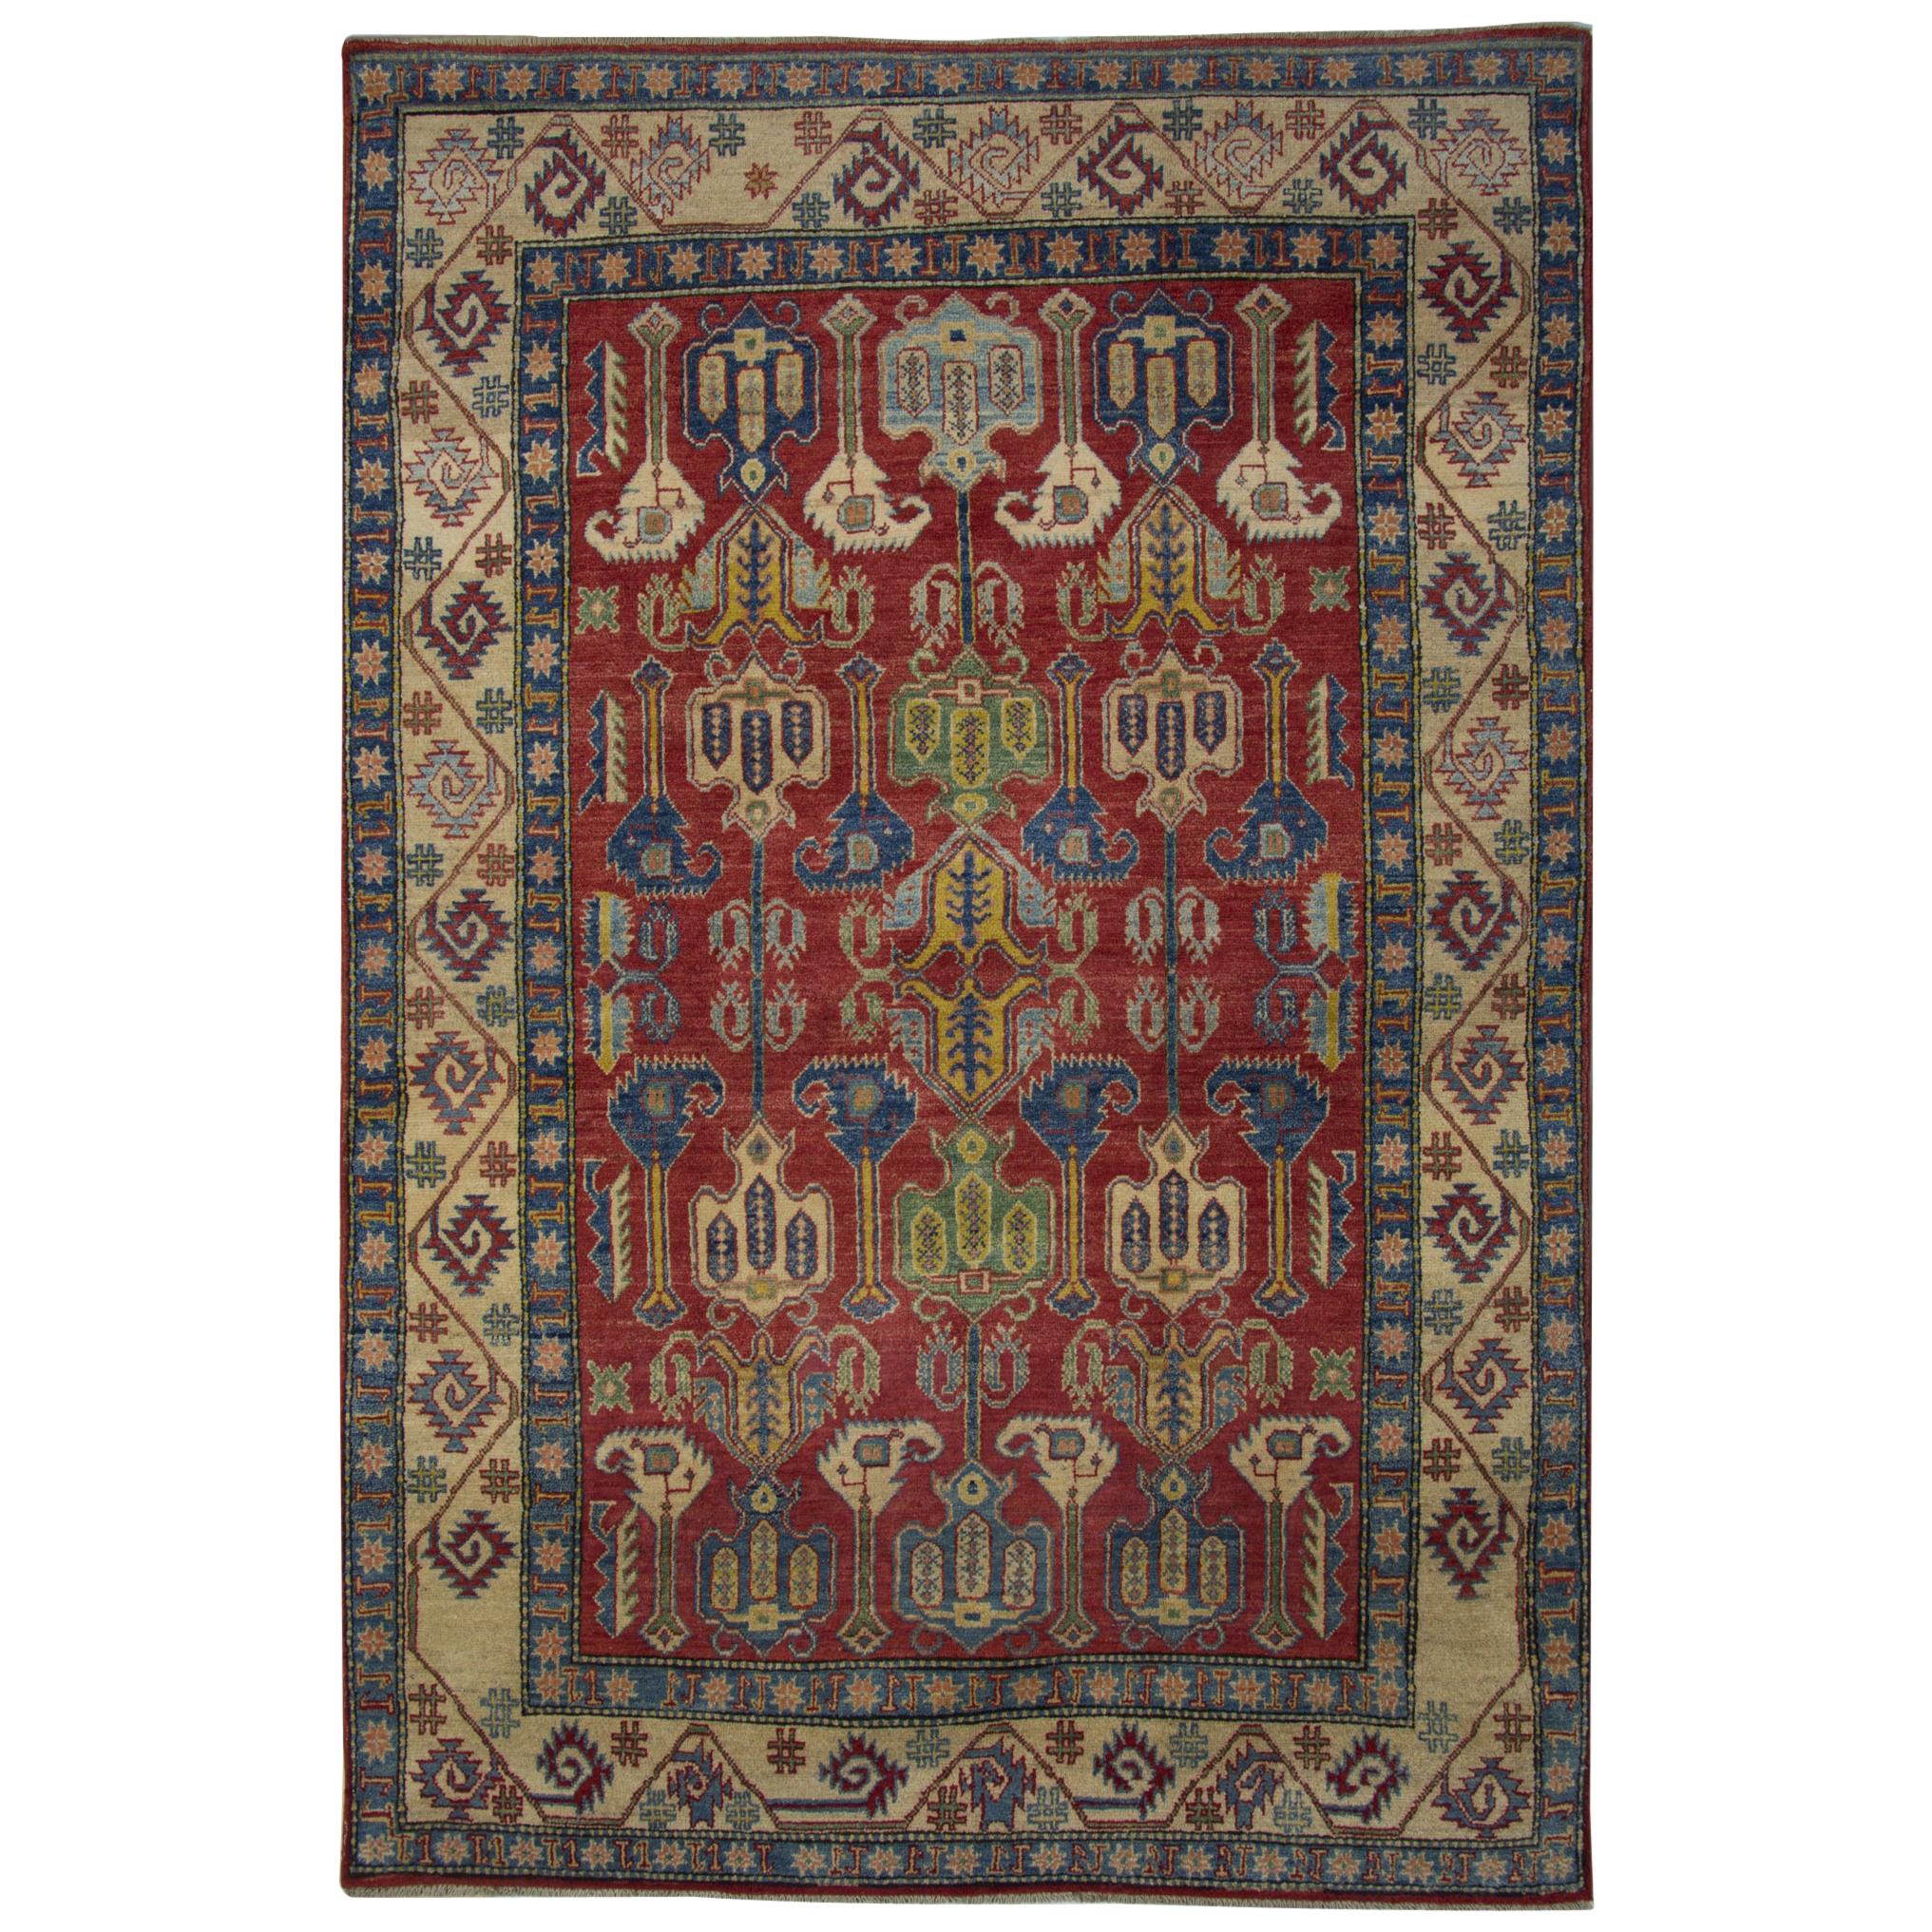 Handmade Rugs, Red Afghan Geometric Rugs, Carpet for Sale 182 x 265 cm 